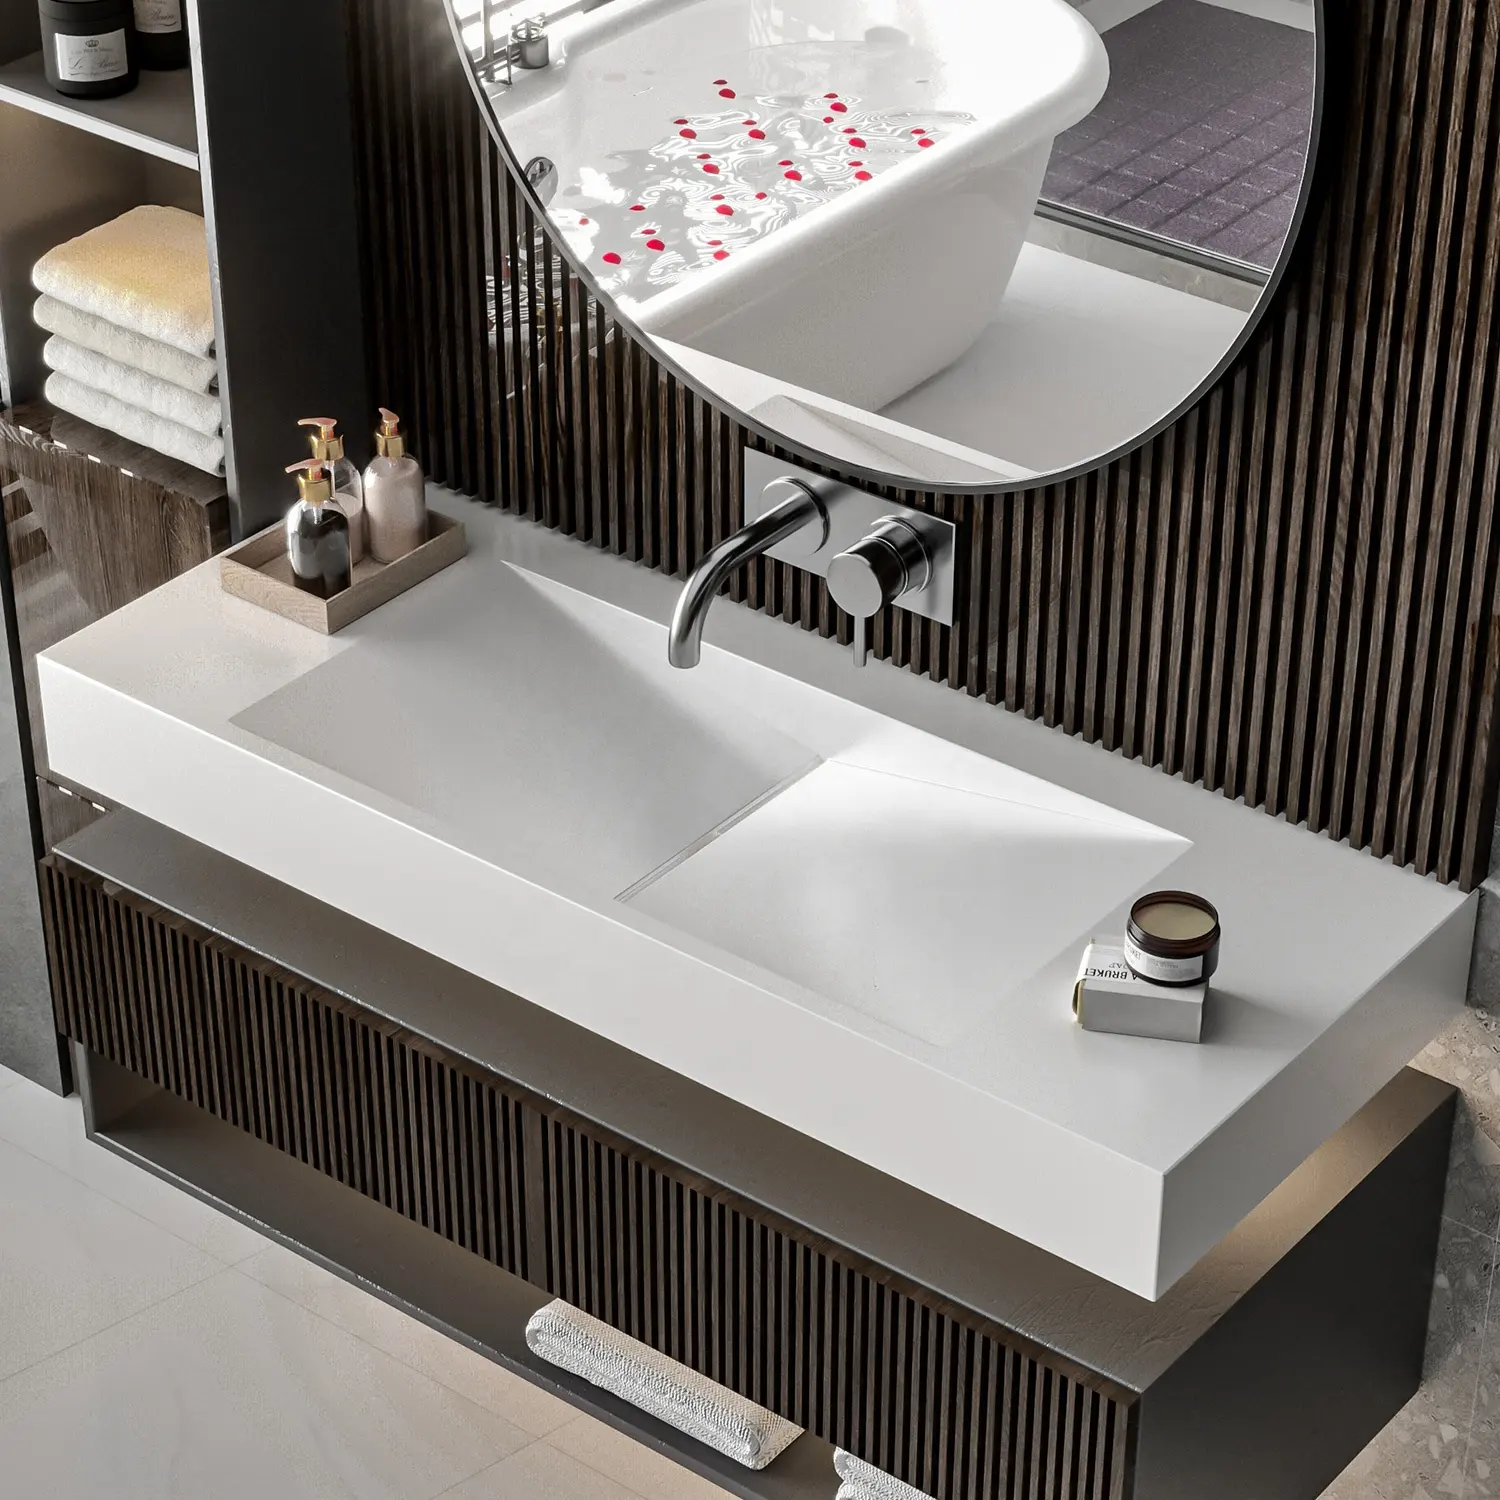 Fanwin-lavabo colgante de pared para baño, lavabo de resina de piedra Rectangular de lujo, color blanco sólido, arte moderno